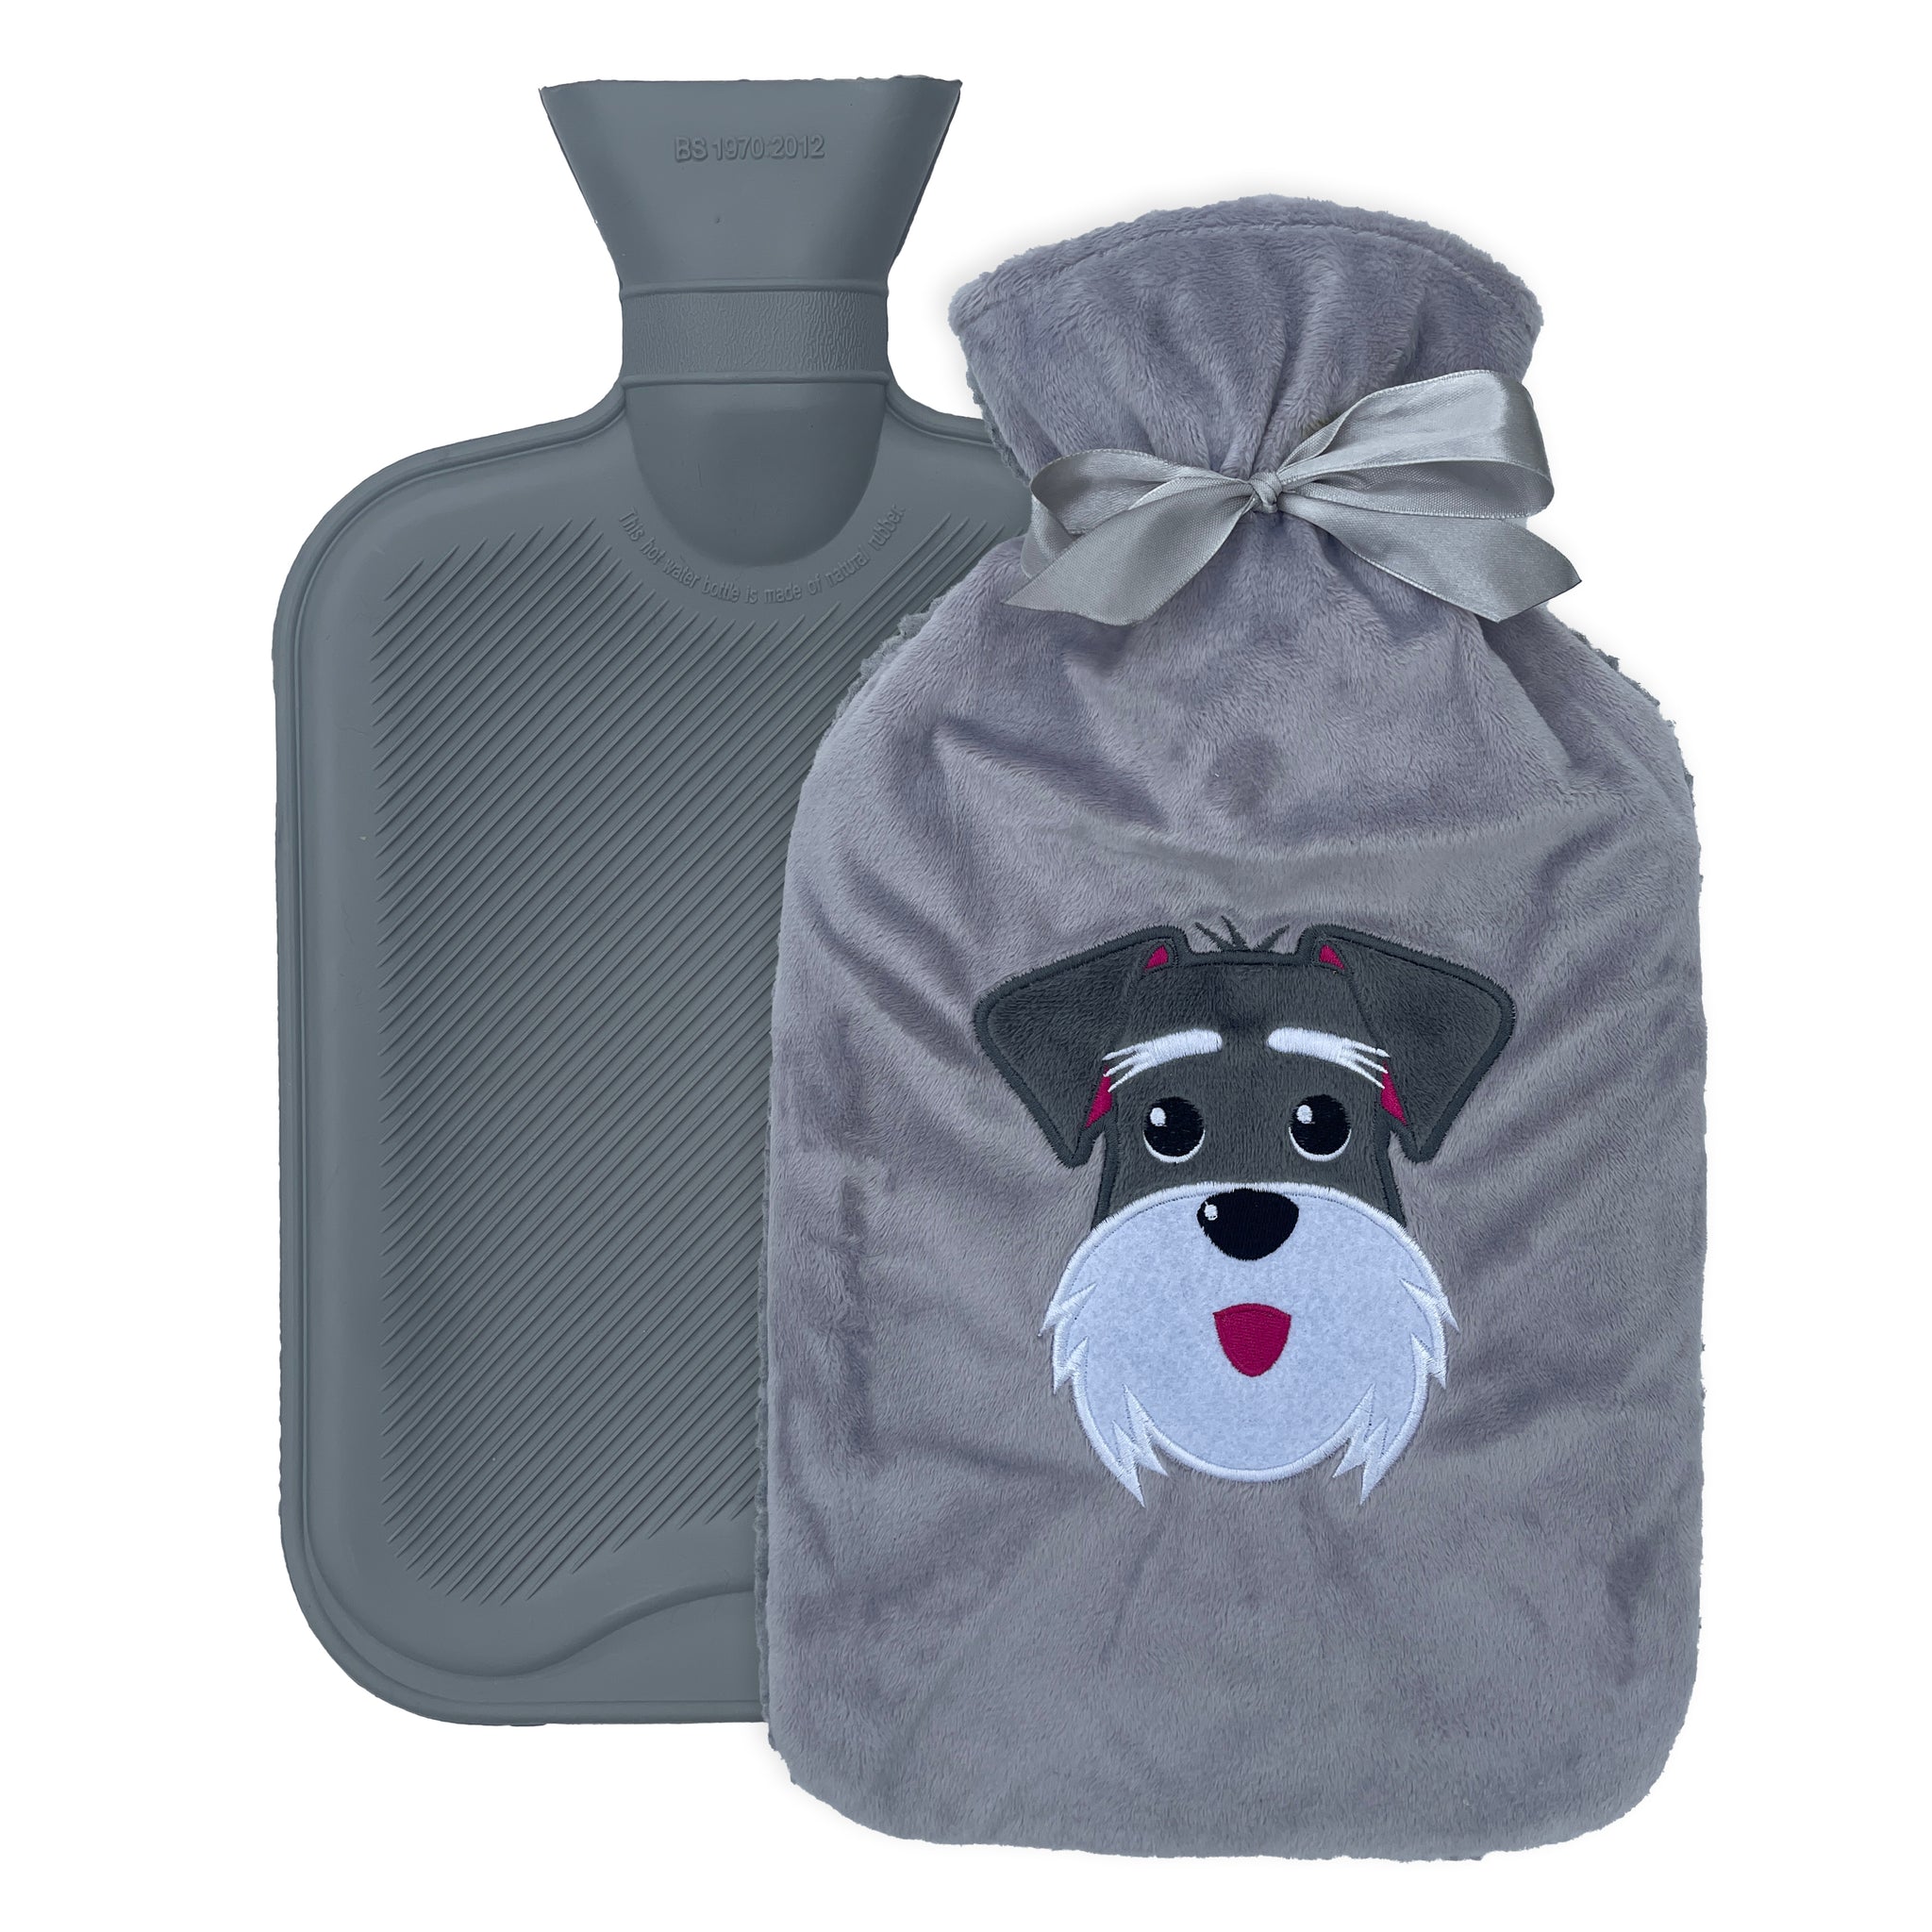 Hot Water Bottle with Sherpa Fleece Cover - 2 Litre - Schnauzer